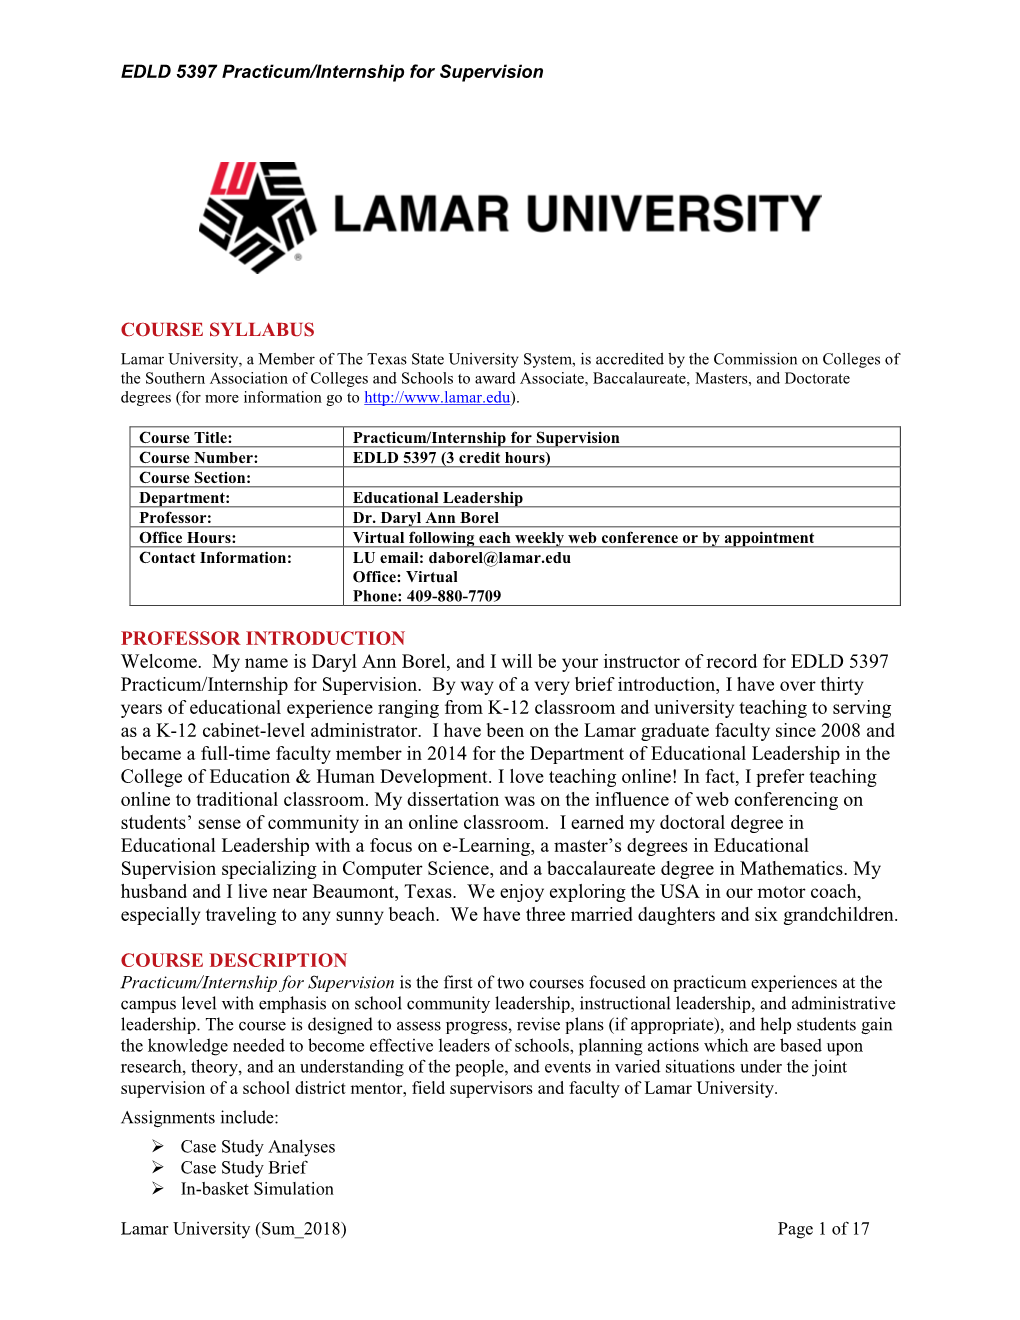 EDLD 5397 Practicum/Internship for Supervision Lamar University